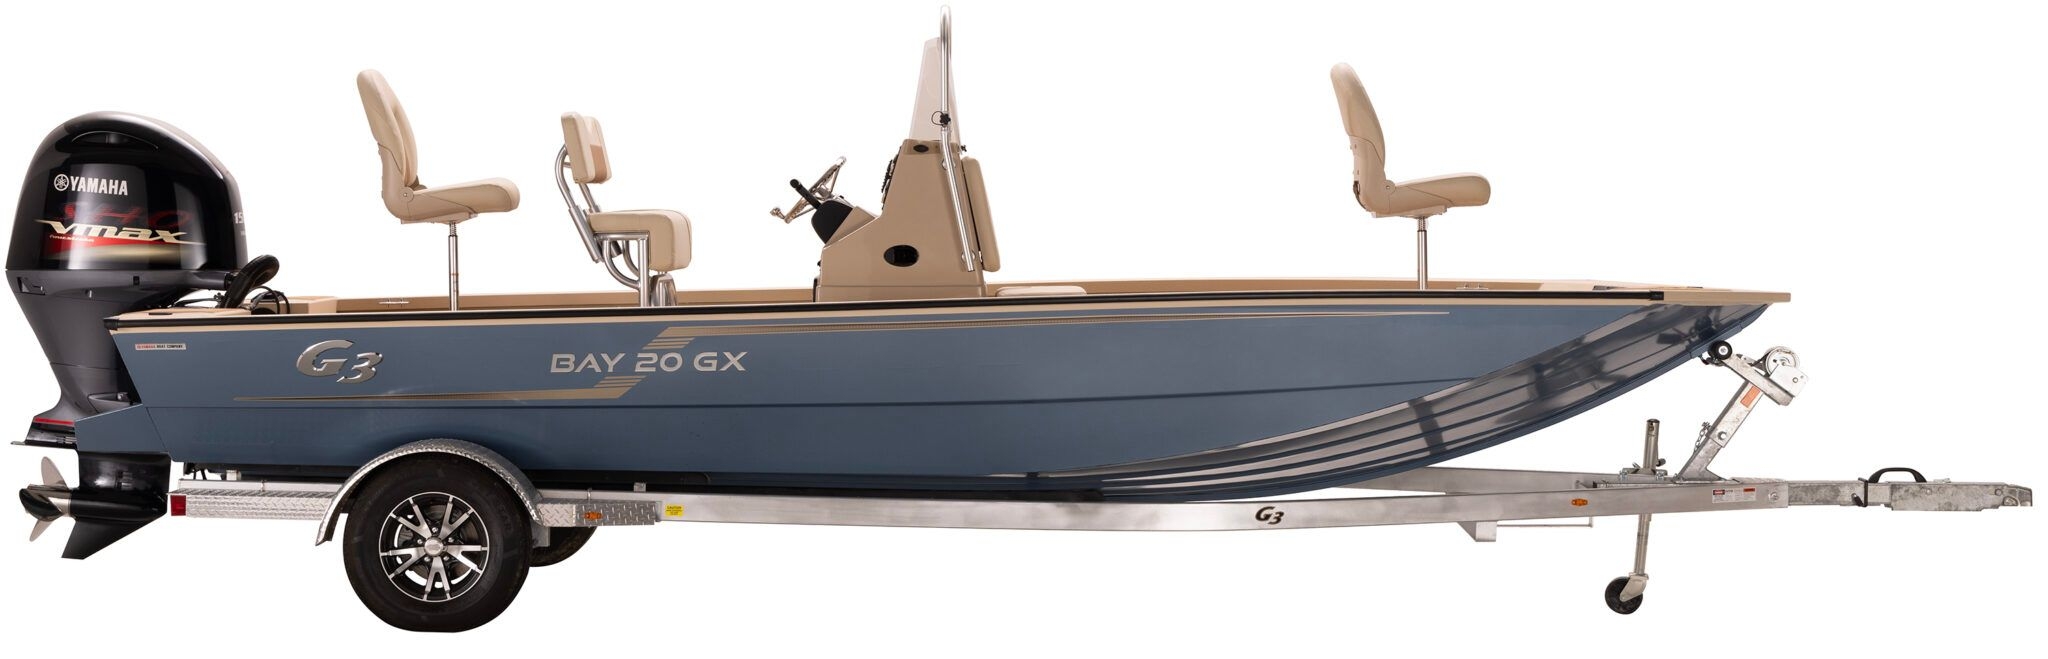 2021 G3 Boats Bay 20 GX